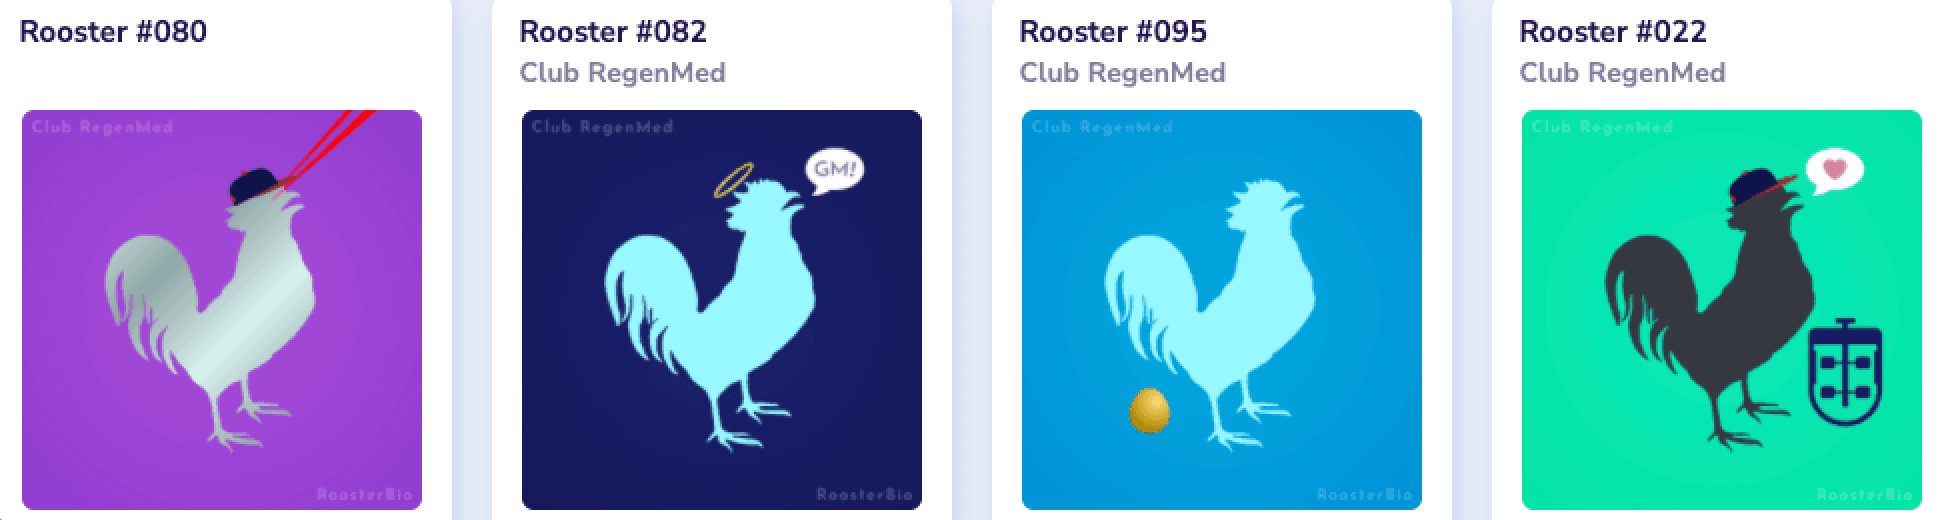 HODL-Rooster banner